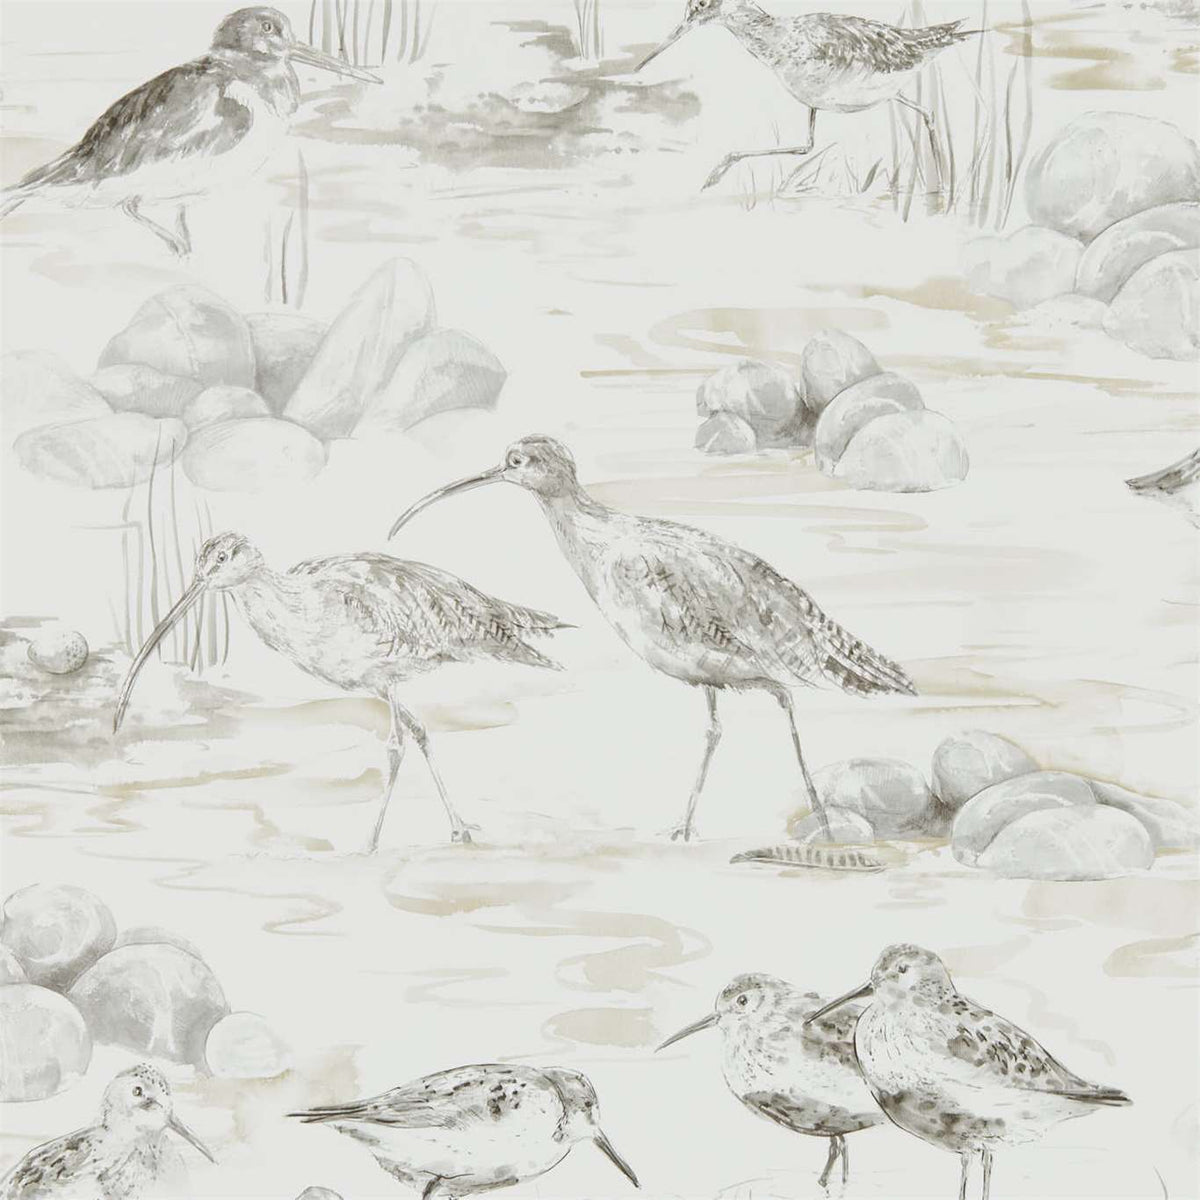 Estuary Birds - Chalk/Sepia